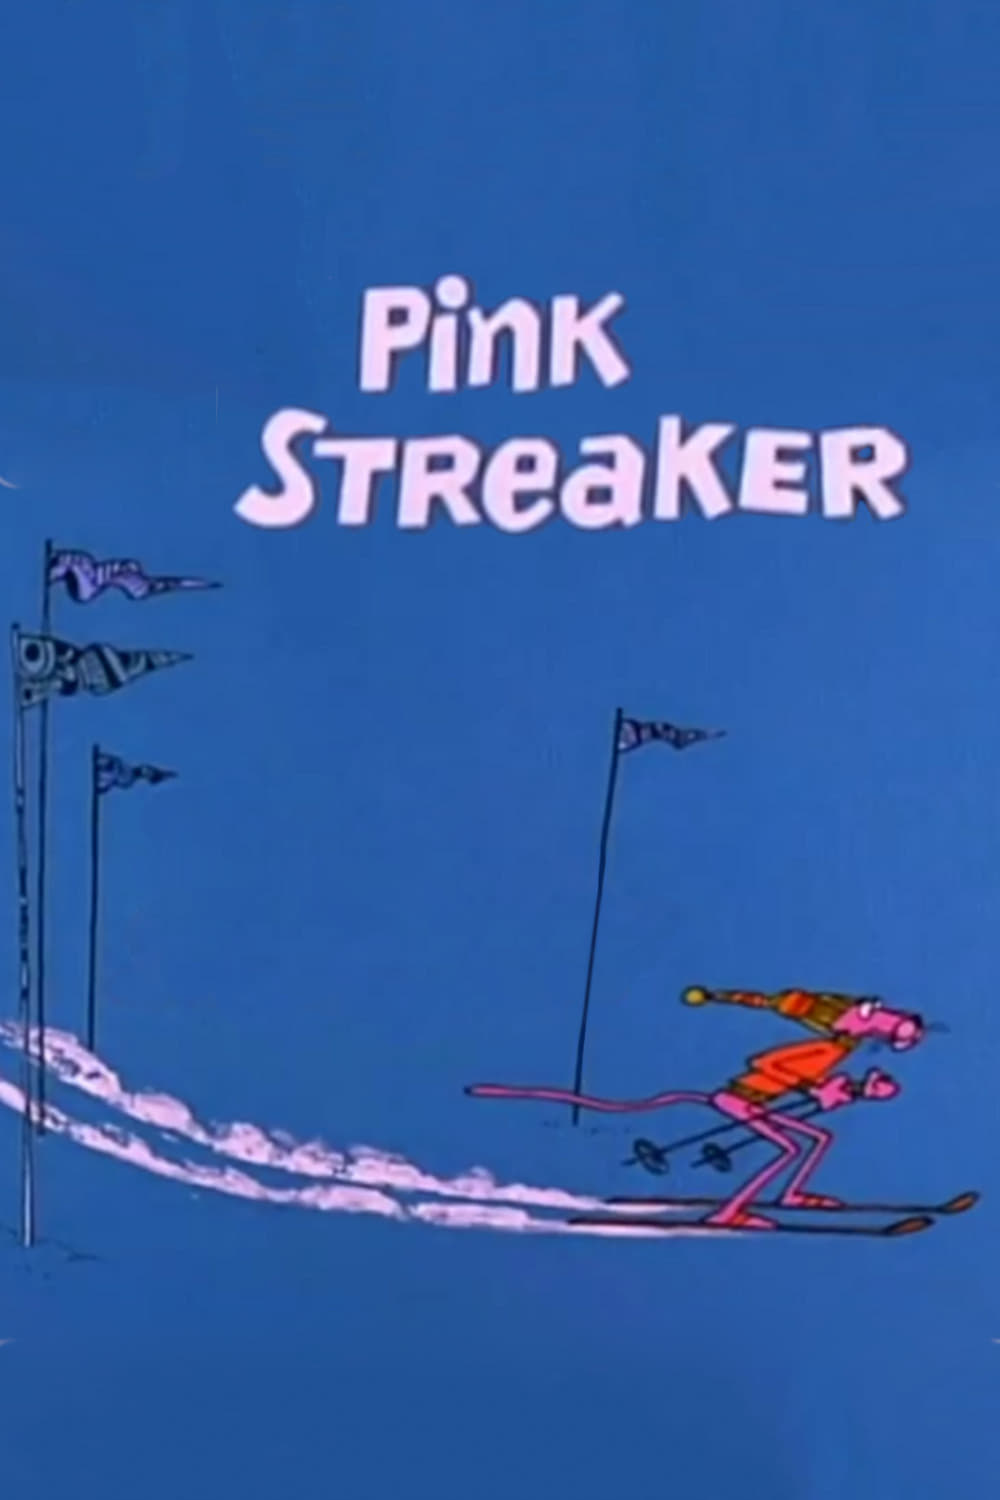 Pink Streaker (1975)